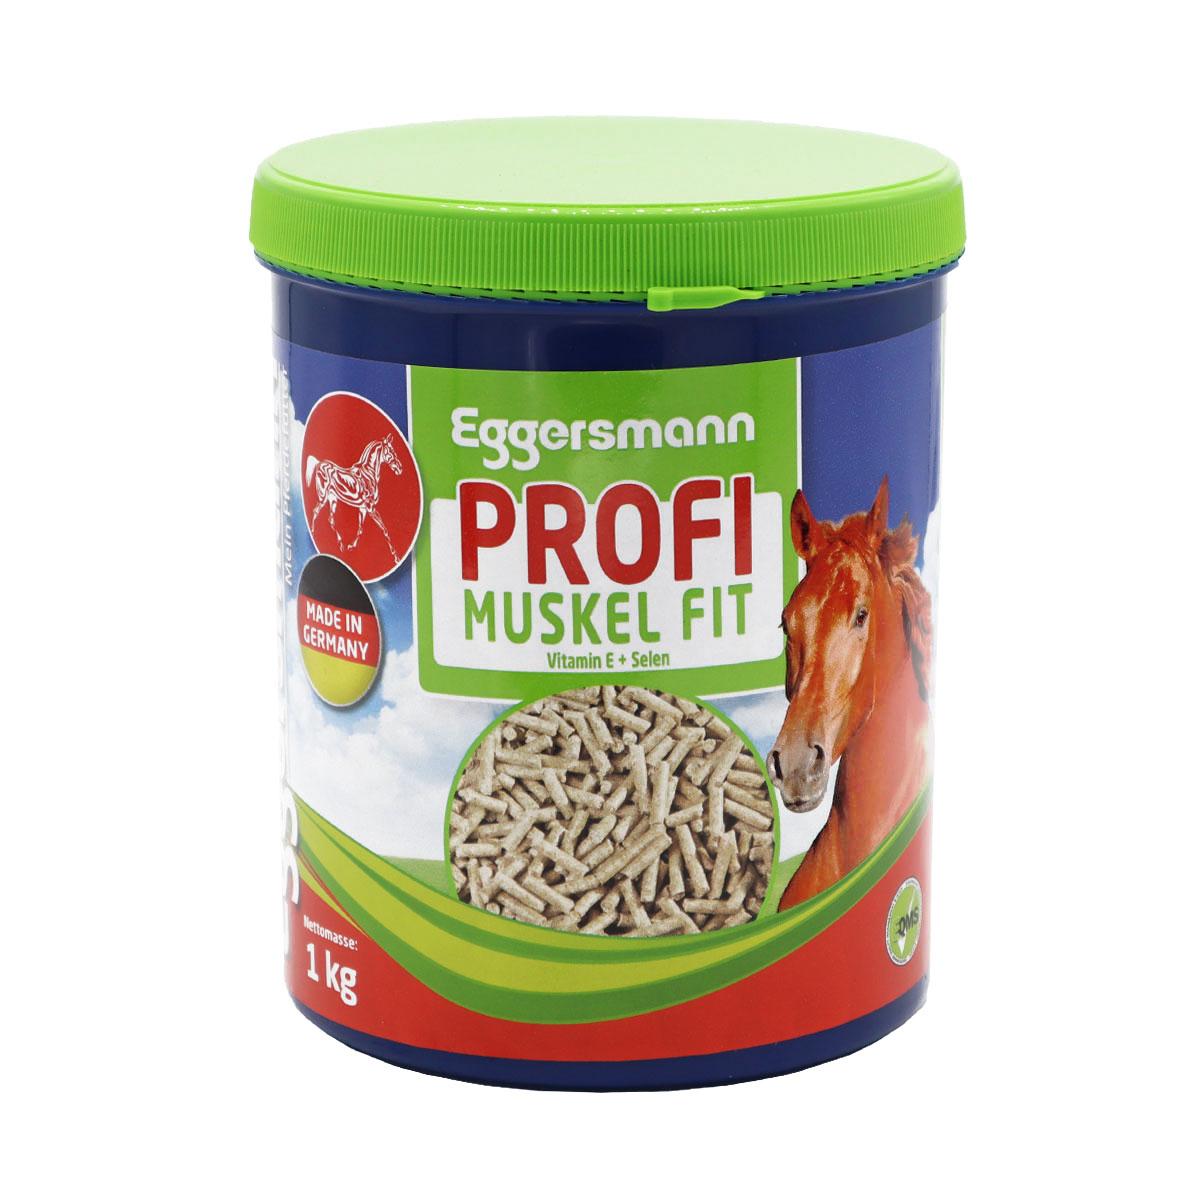 Eggersmann Profi Muskel Fit (Vitamin E + Selen) 1 kg